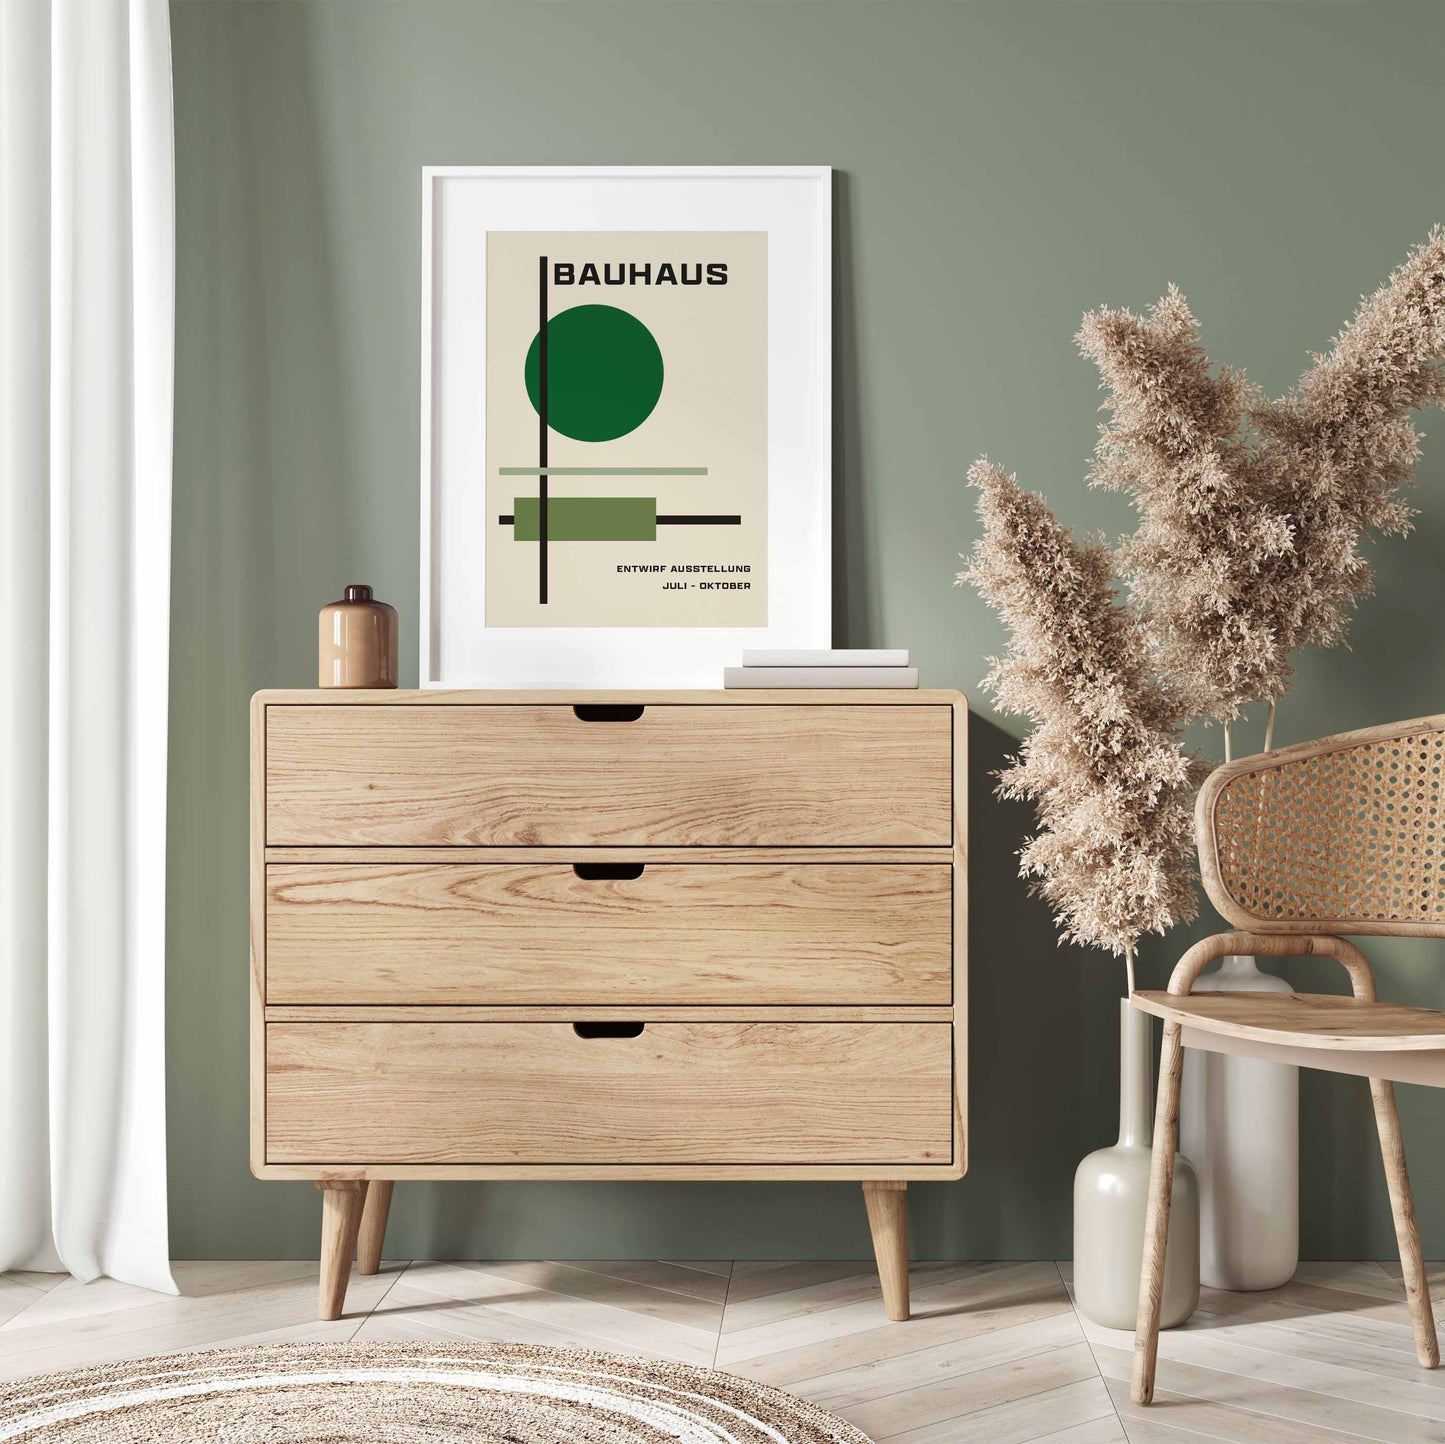 Green Bauhaus poster